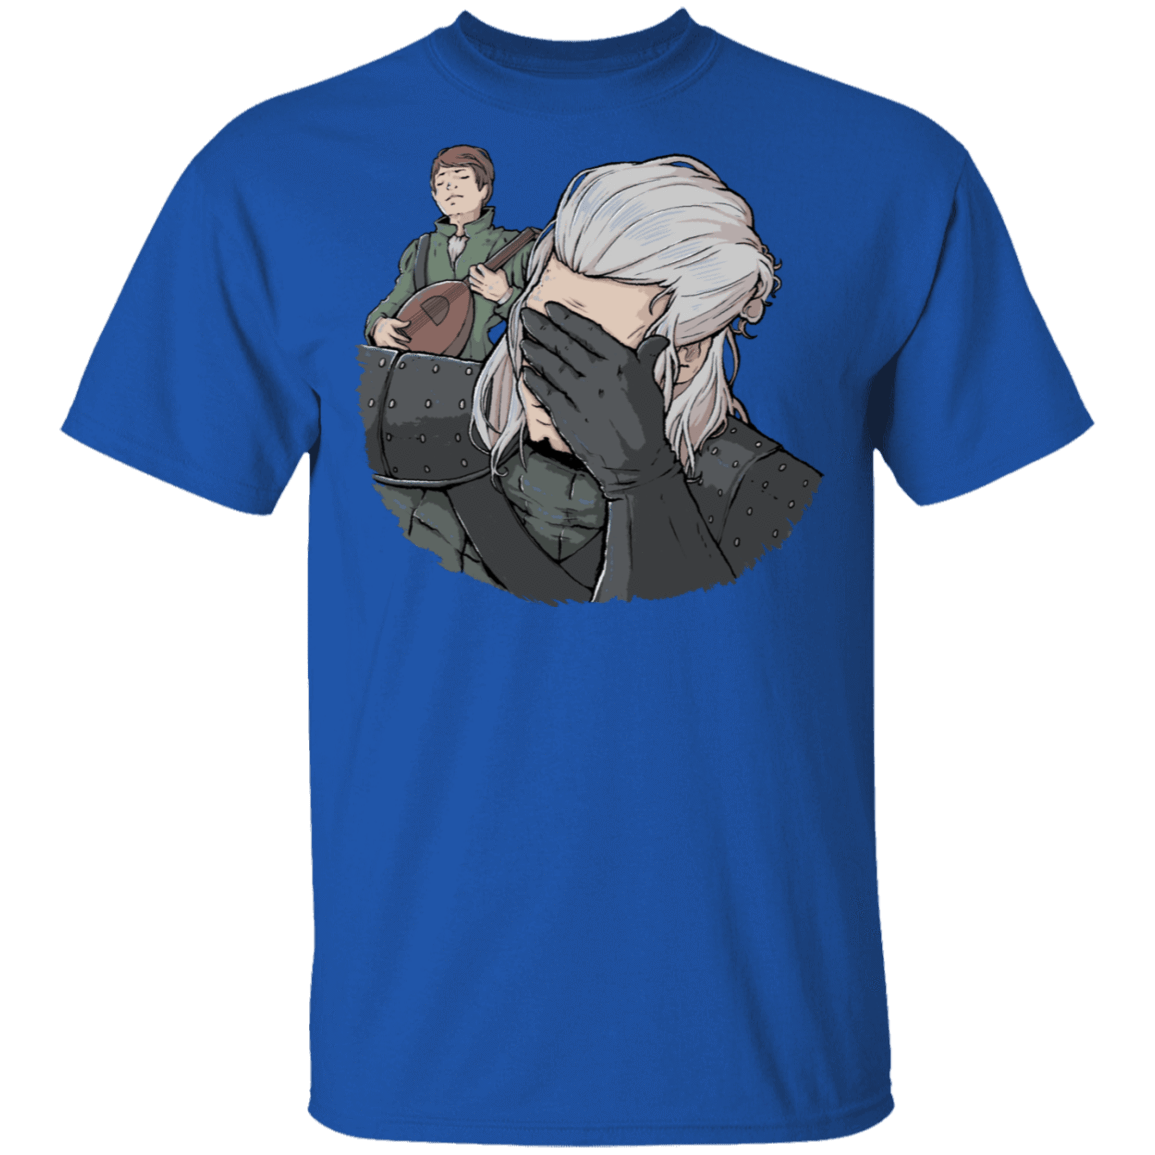 T-Shirts Royal / S Geralt Face Palm T-Shirt